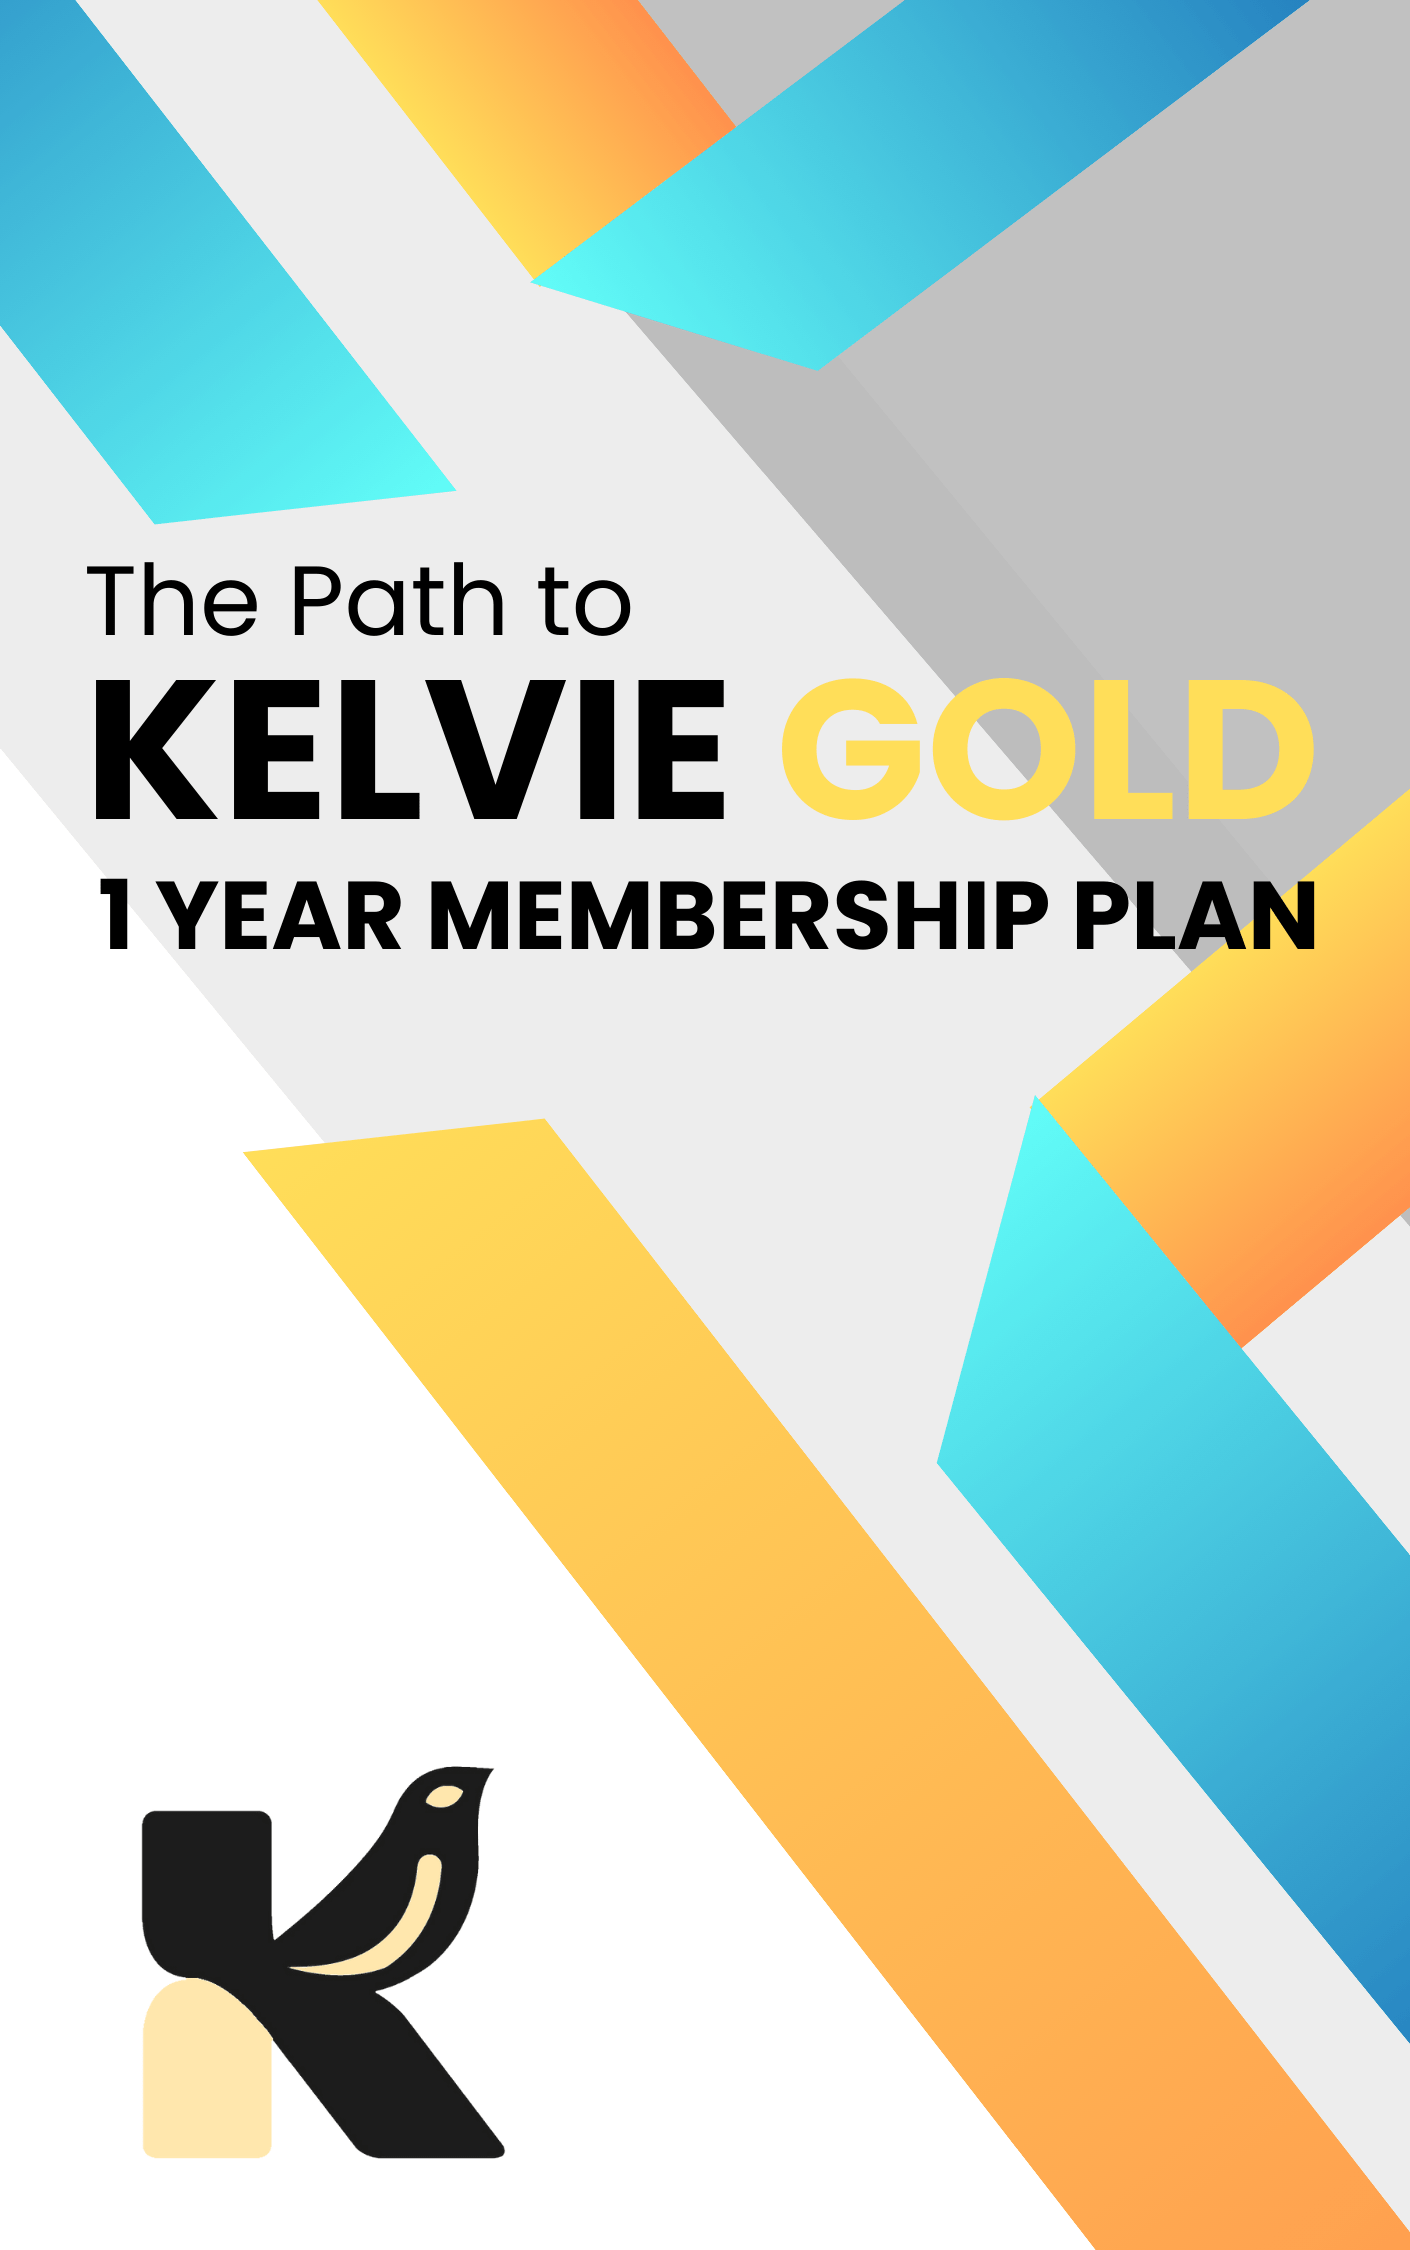 KELVIE GOLD - 1 Year Membership